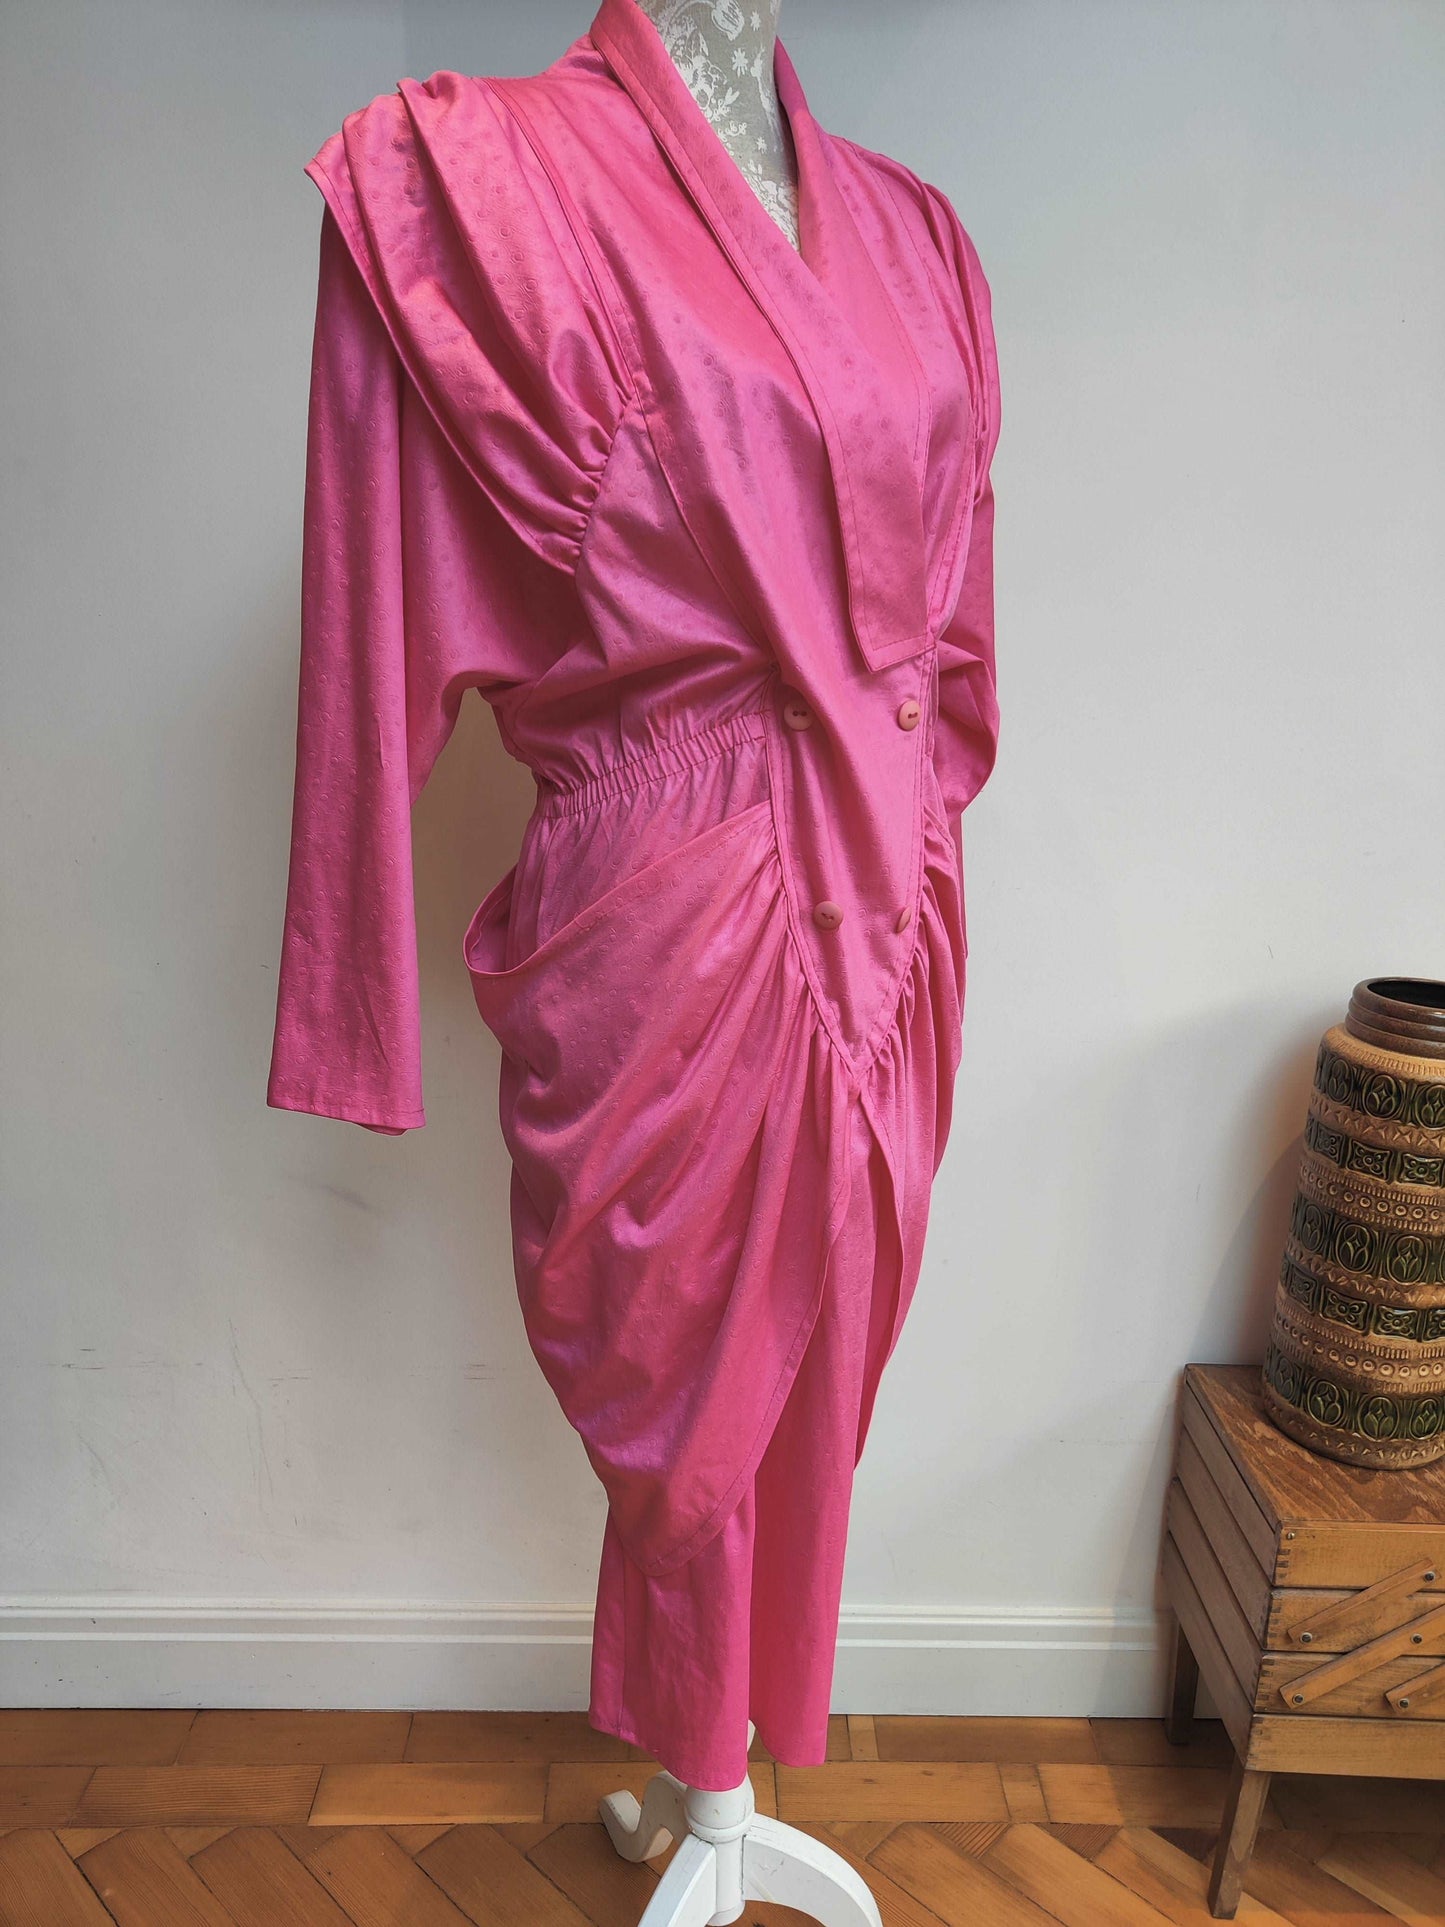 Hot pink 80s power dress size 12